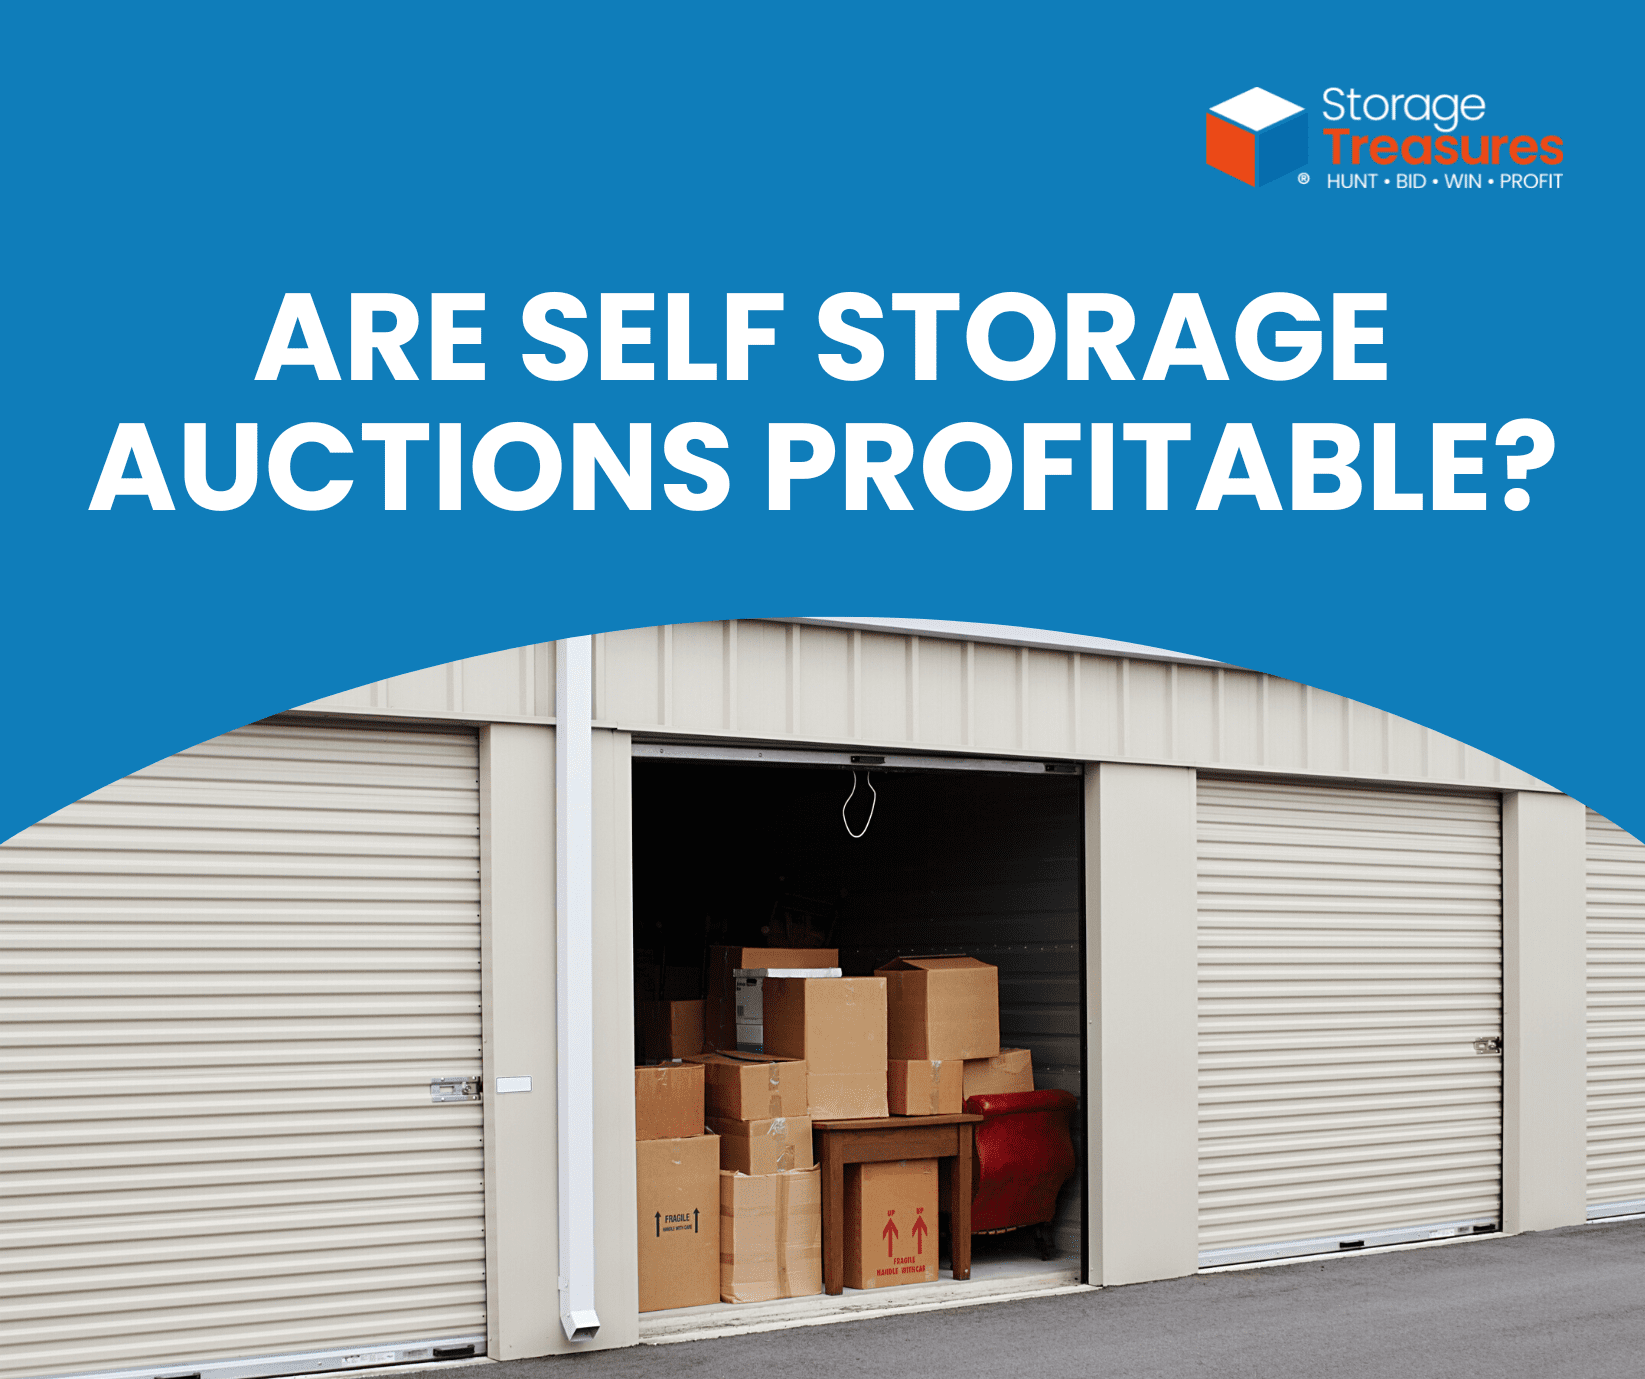 Are self storage auctions profitable?